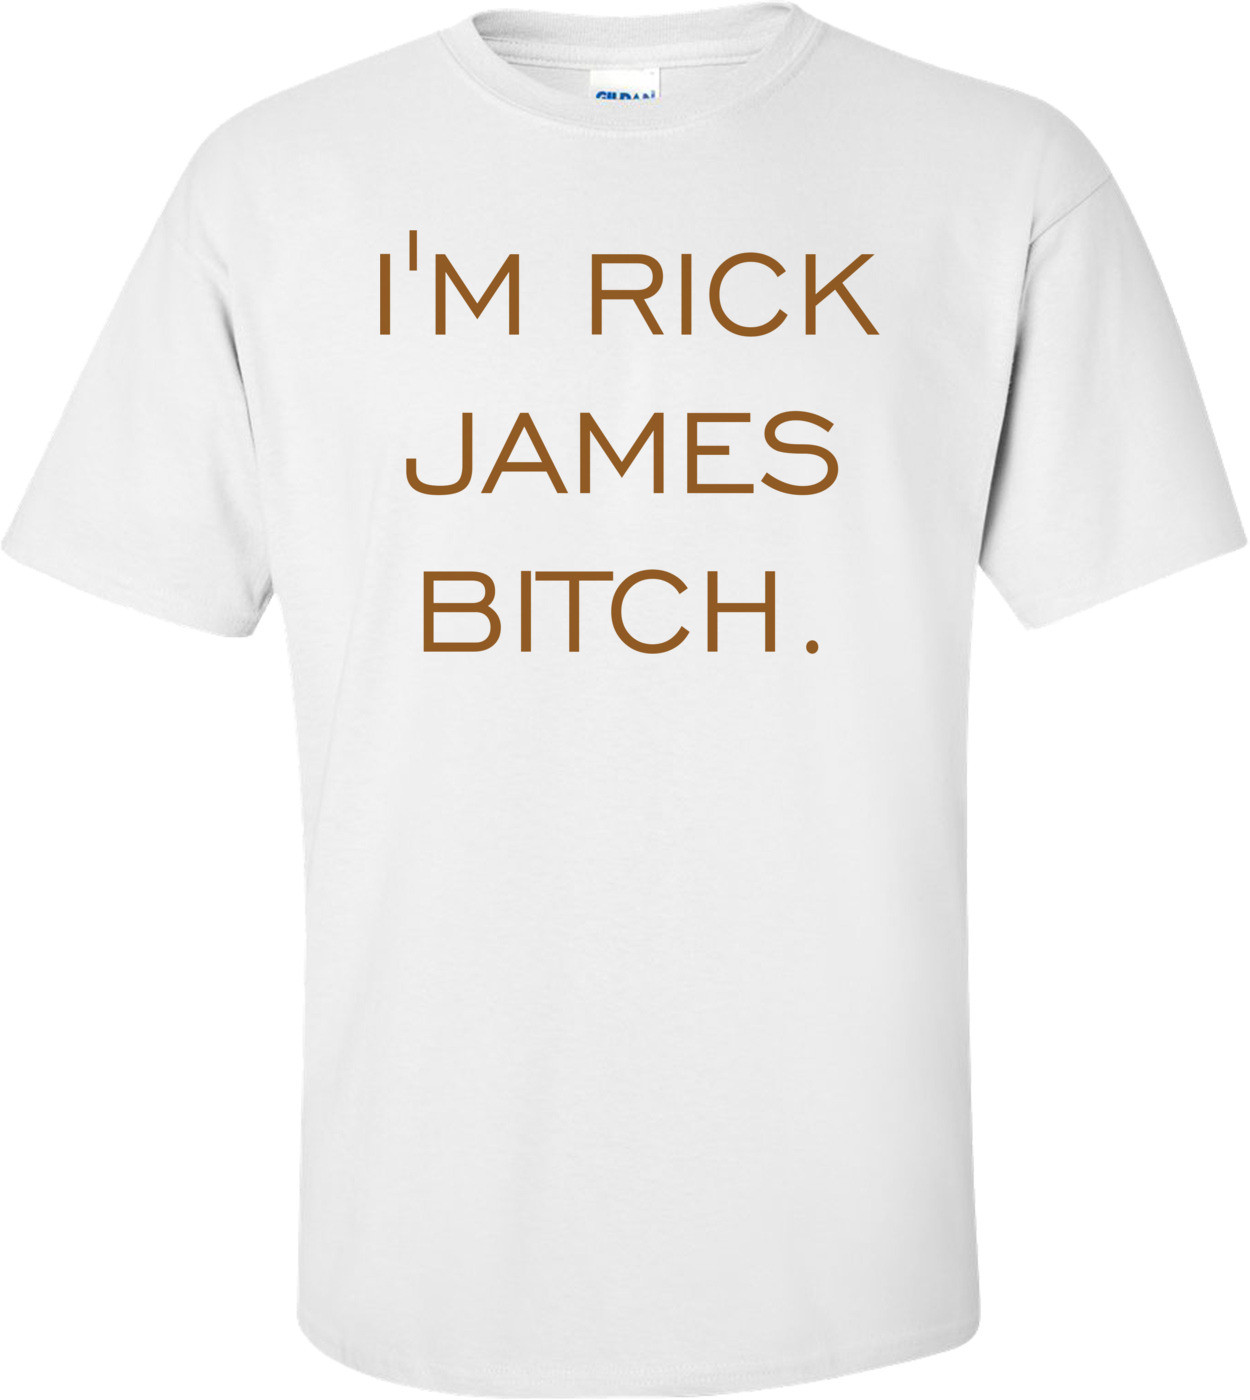 I'M RICK JAMES BITCH. Shirt